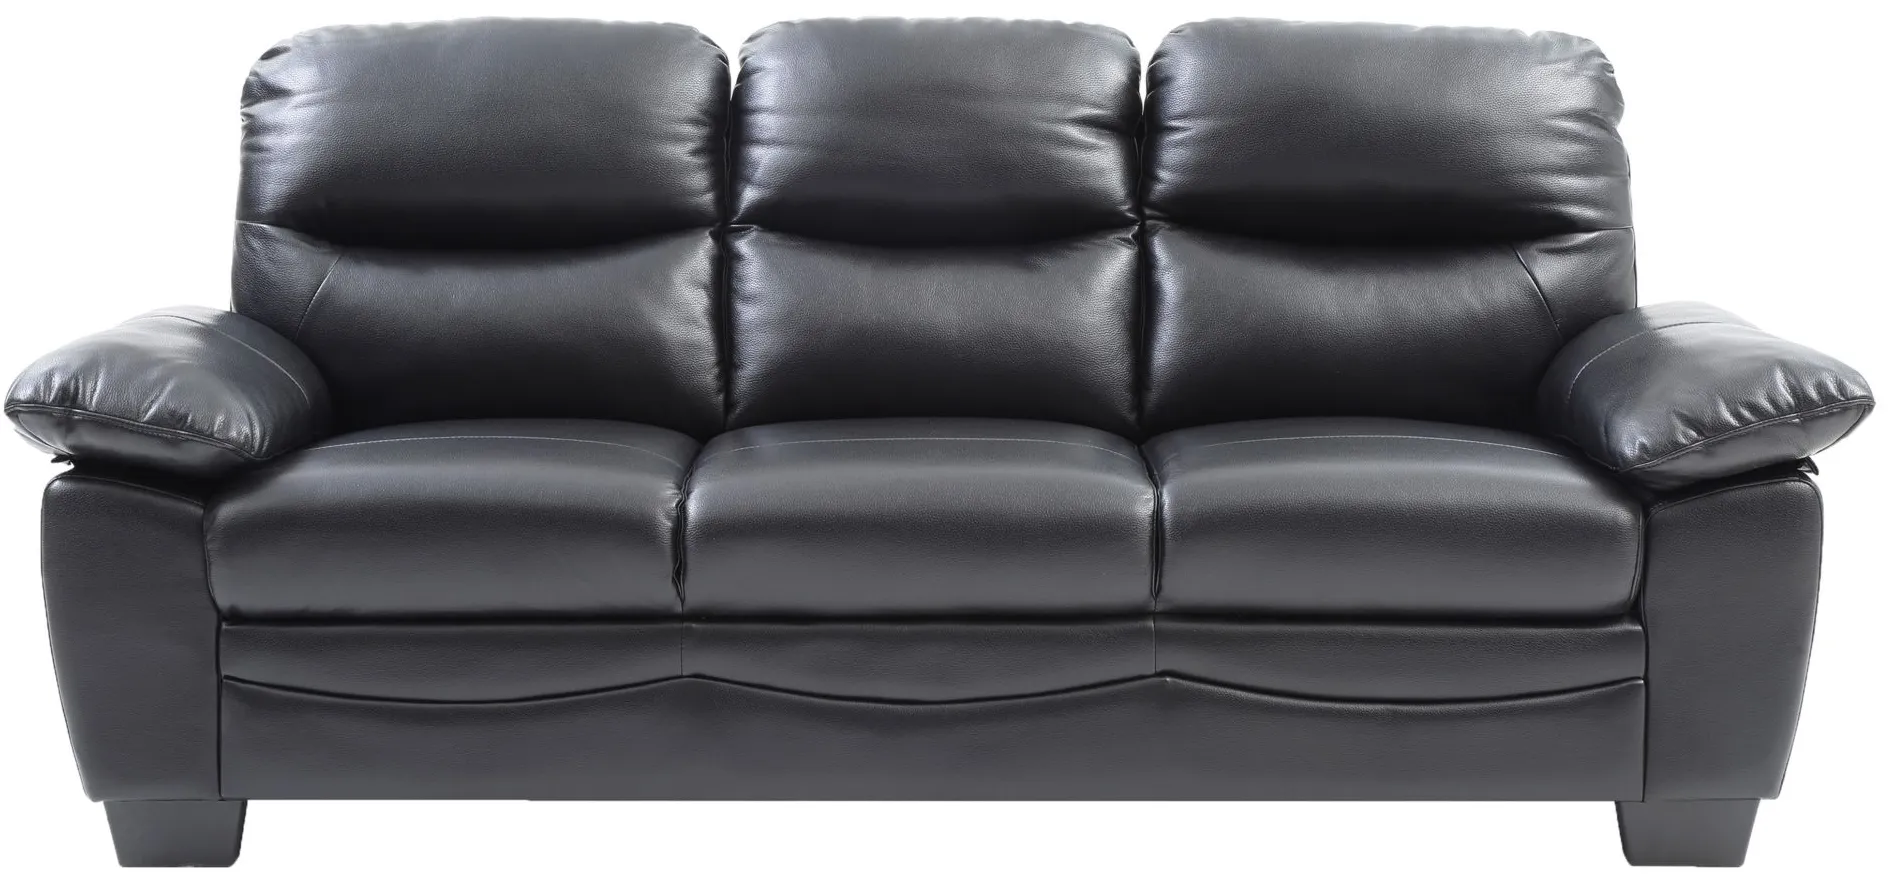 Marta Sofa in Black by Glory Furniture